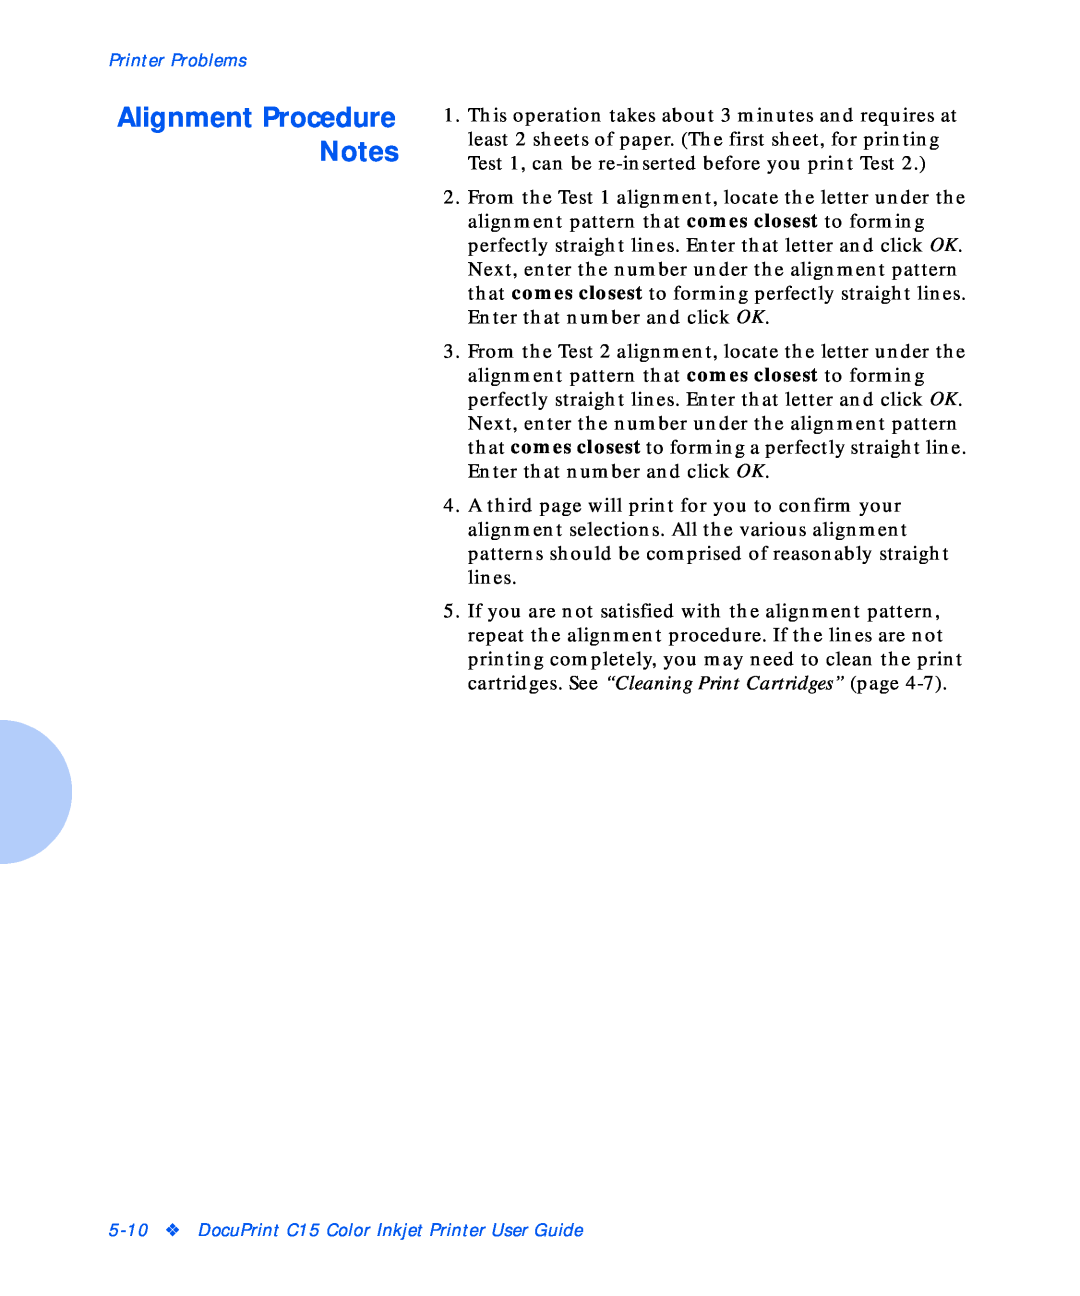 Xerox C15 manual Alignment Procedure Notes, Printer Problems 